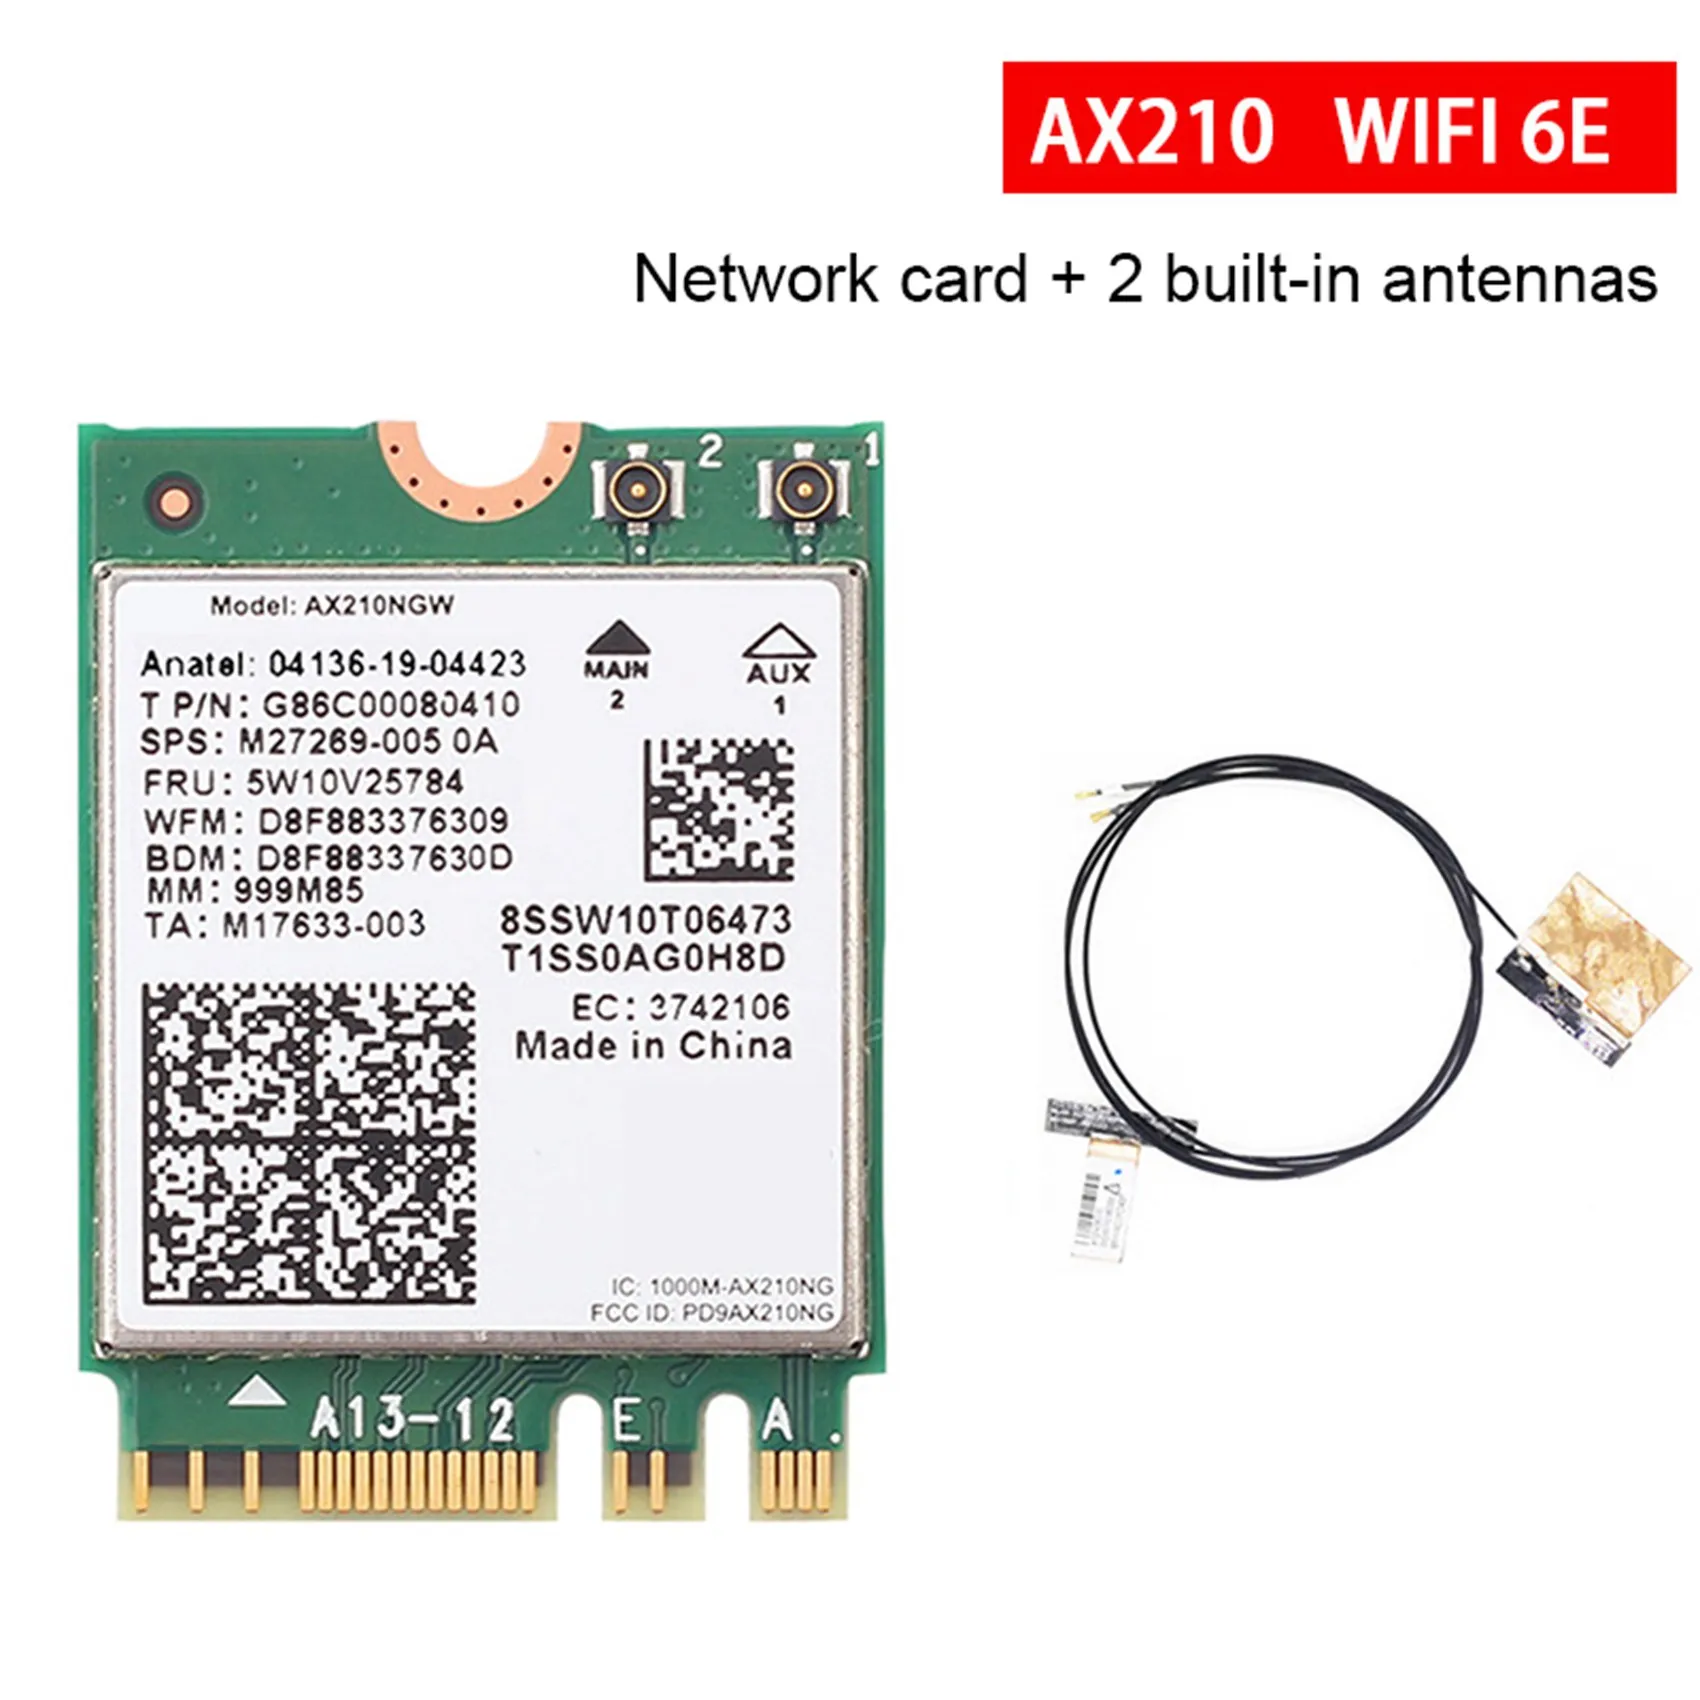 

Беспроводная сетевая карта AX210NGW + 2 встроенных антенны WIFI 6E Gigabit NGFF M.2 2,4G/5G/6G трехдиапазонная беспроводная сетевая карта